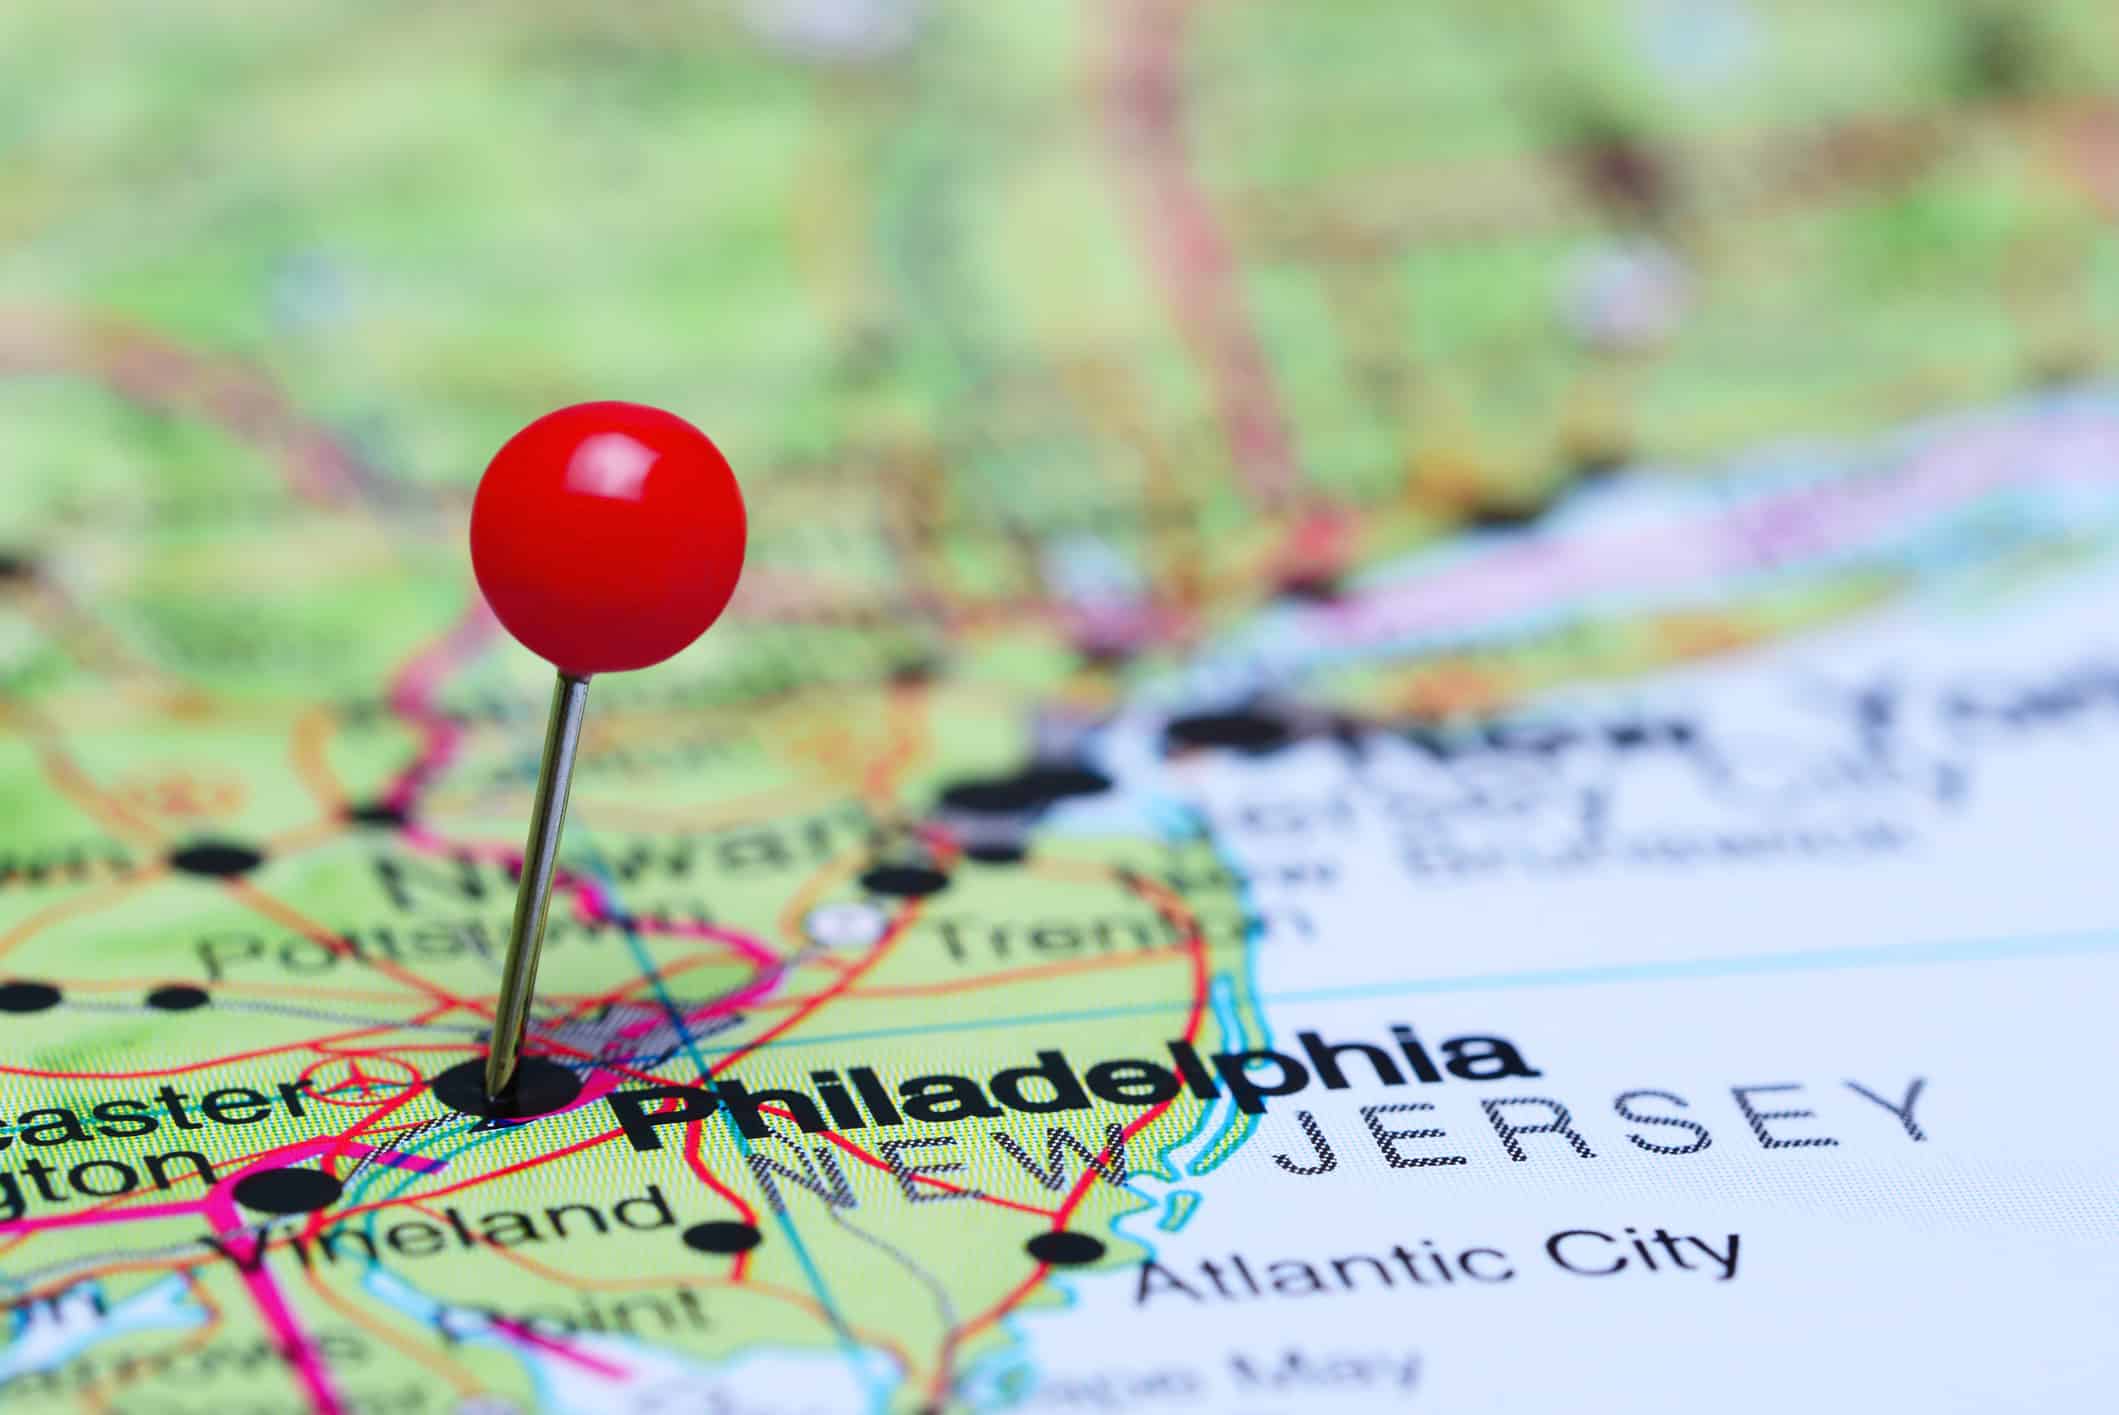 Philadelphia pinned on a map of USA